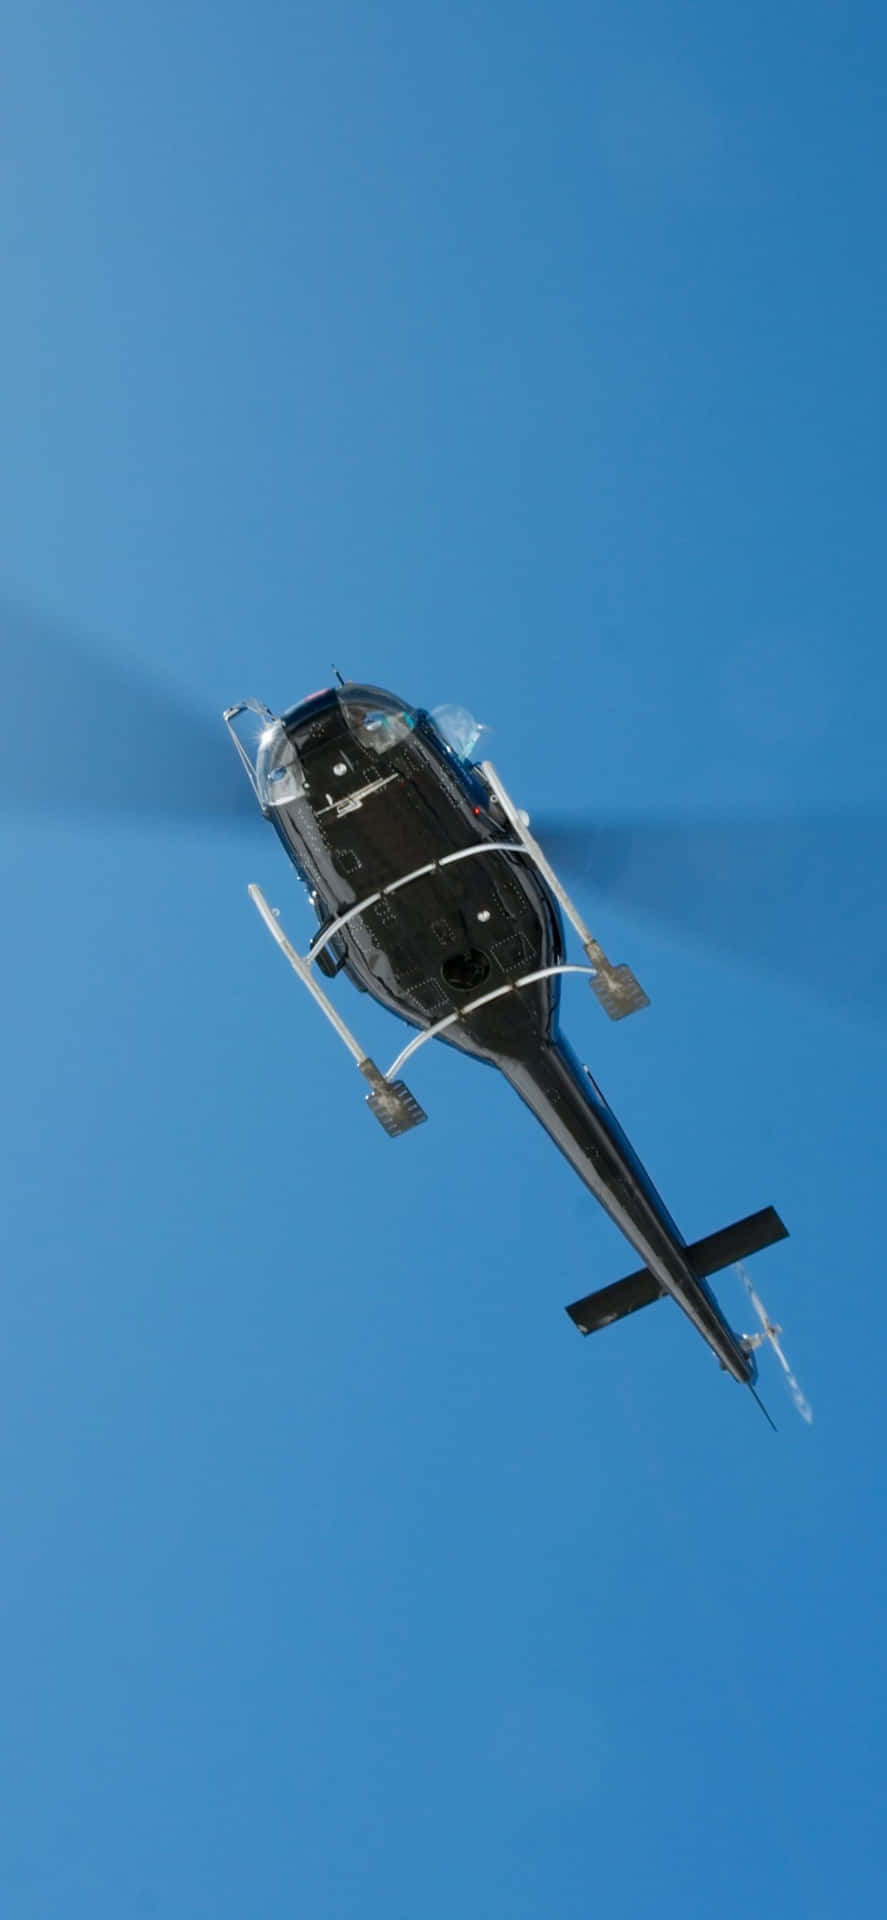 Njutav Fantastisk Utsikt Över Himlen På En Iphone Xs Max Helicopter!